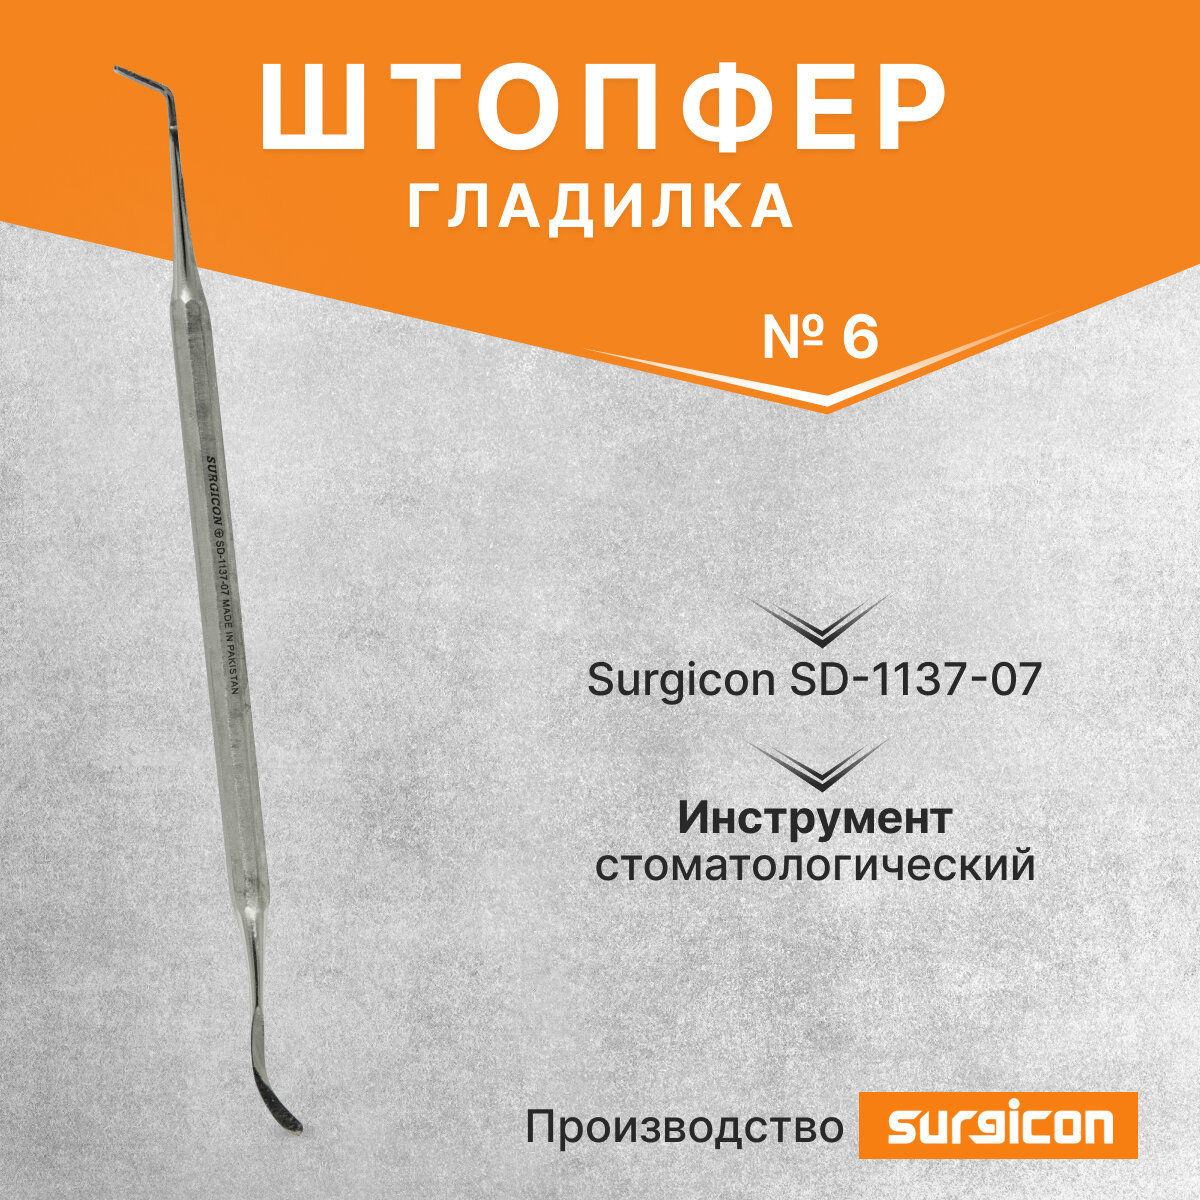 Штопфер - гладилка №6 серповидная / дистальная Surgicon SD-1137-07